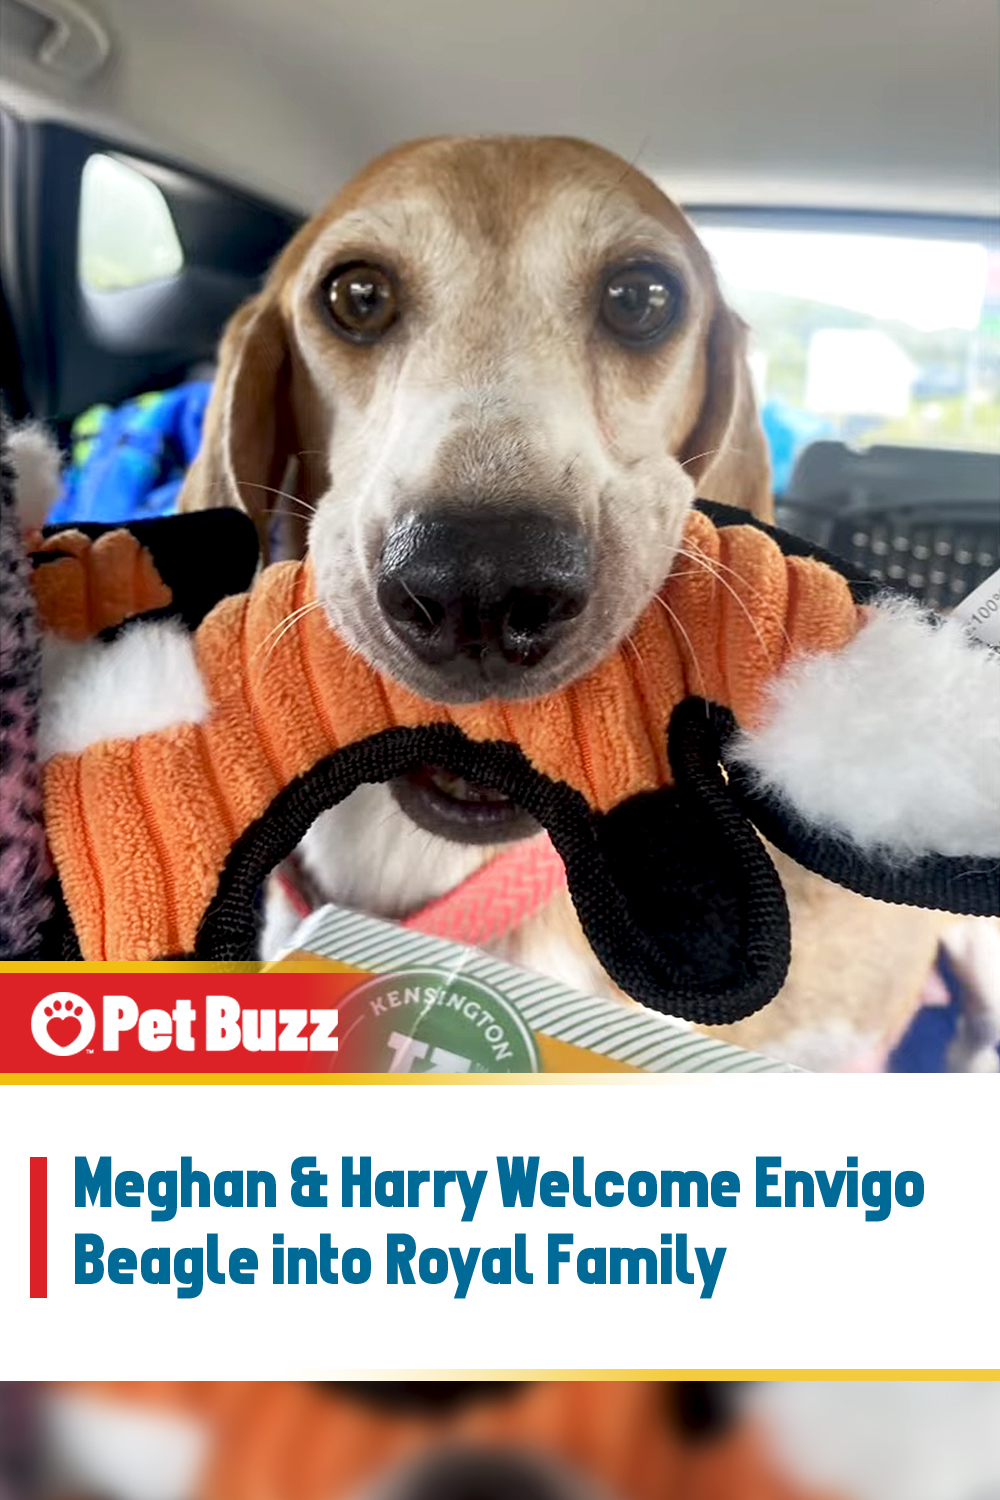 Meghan & Harry Welcome Envigo Beagle into Royal Family